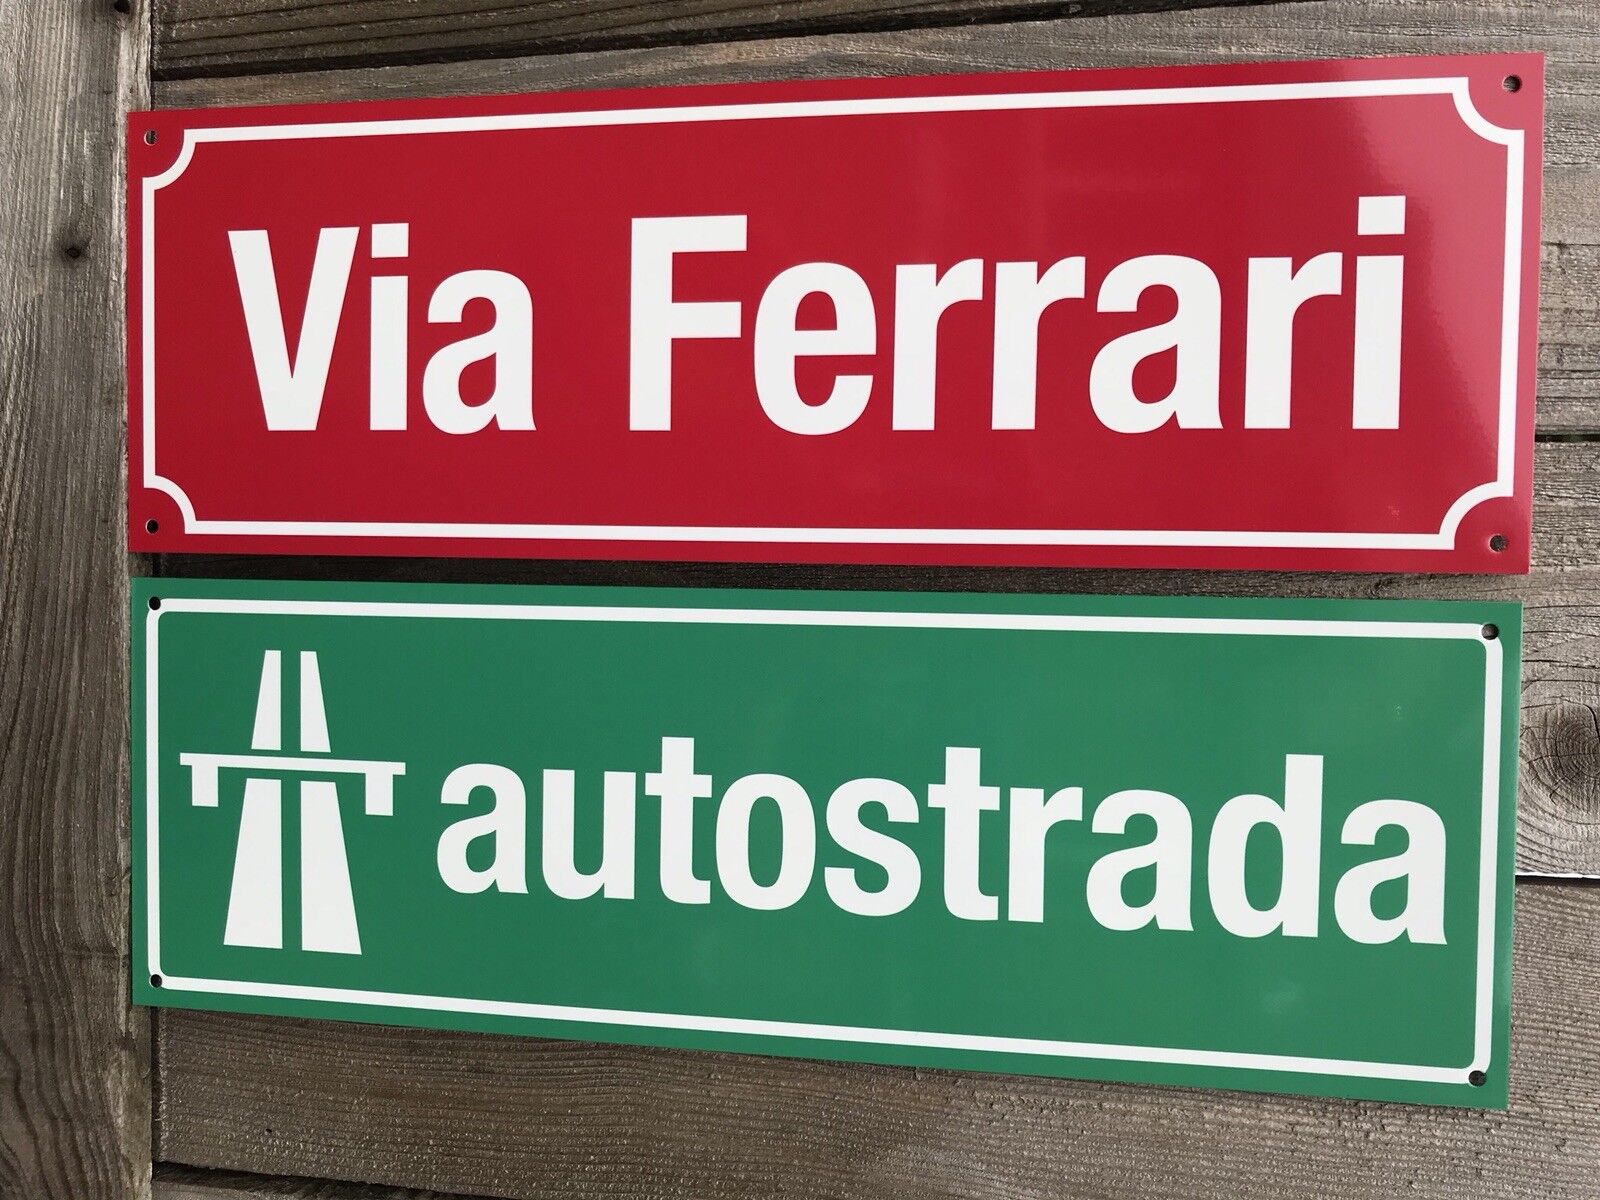 Autostrada Italian Highway Autobahn  signs combo